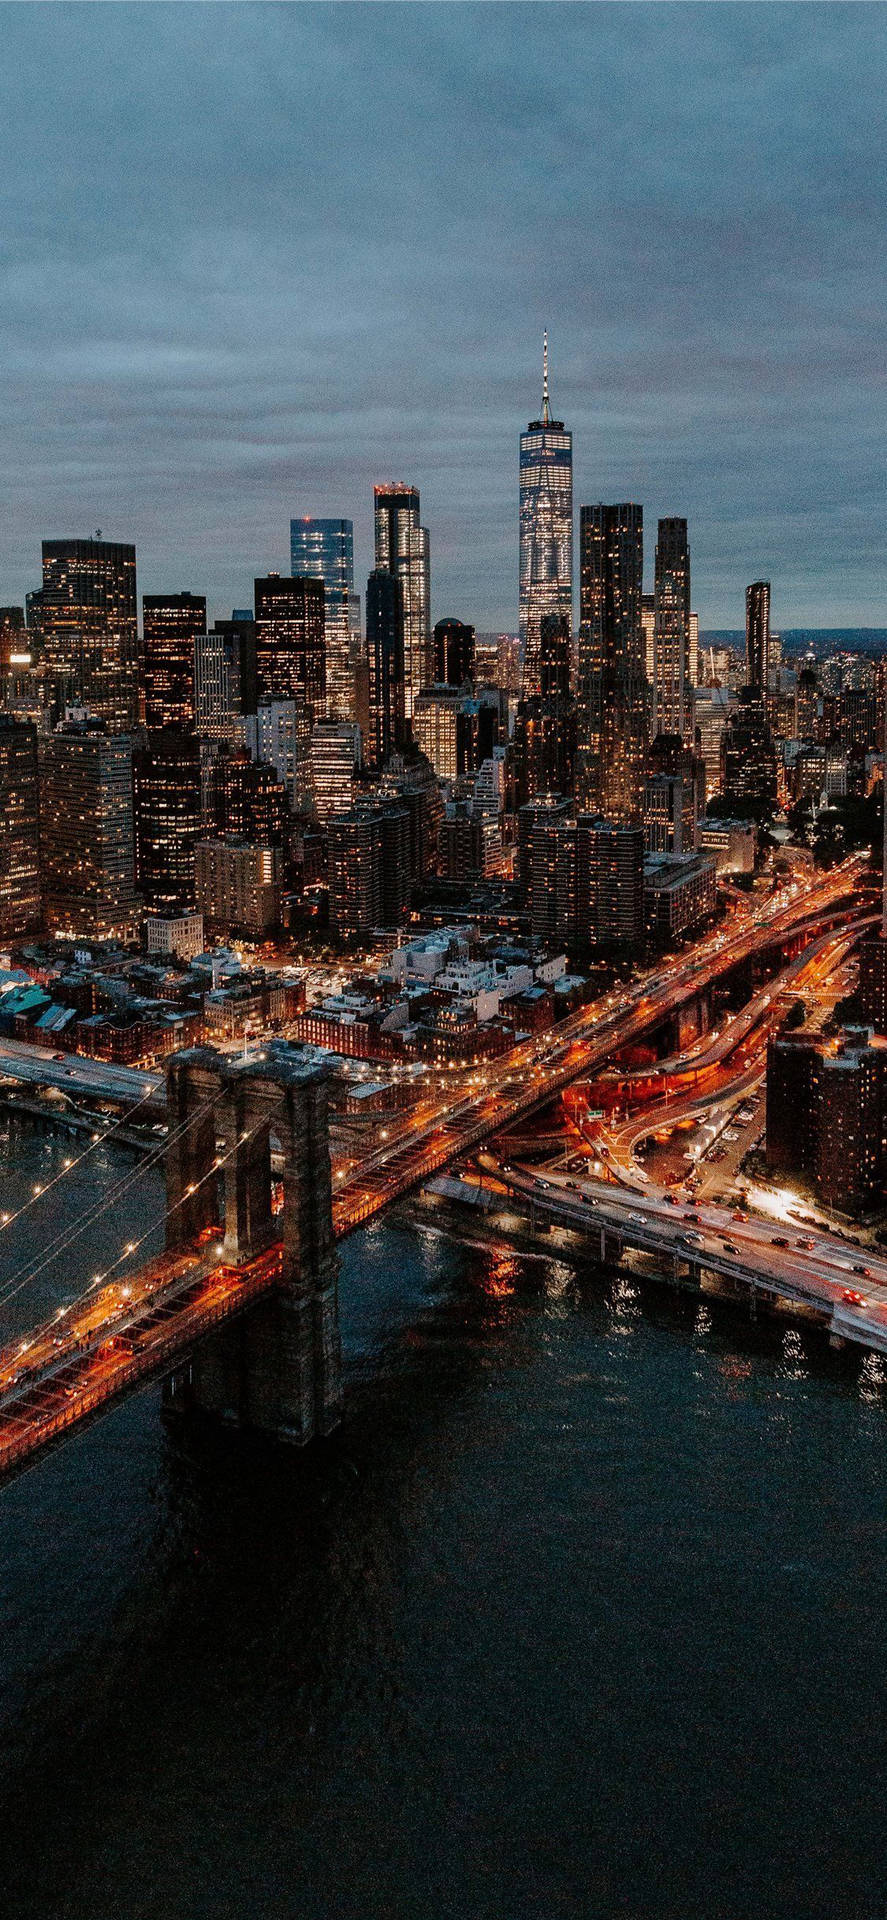 City Night Iphone Aesthetic Background